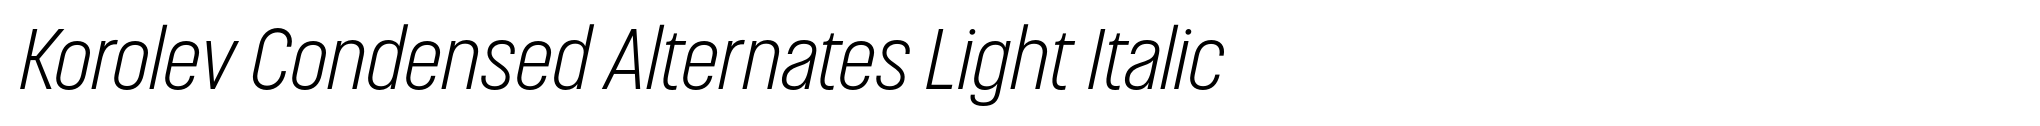 Korolev Condensed Alternates Light Italic image